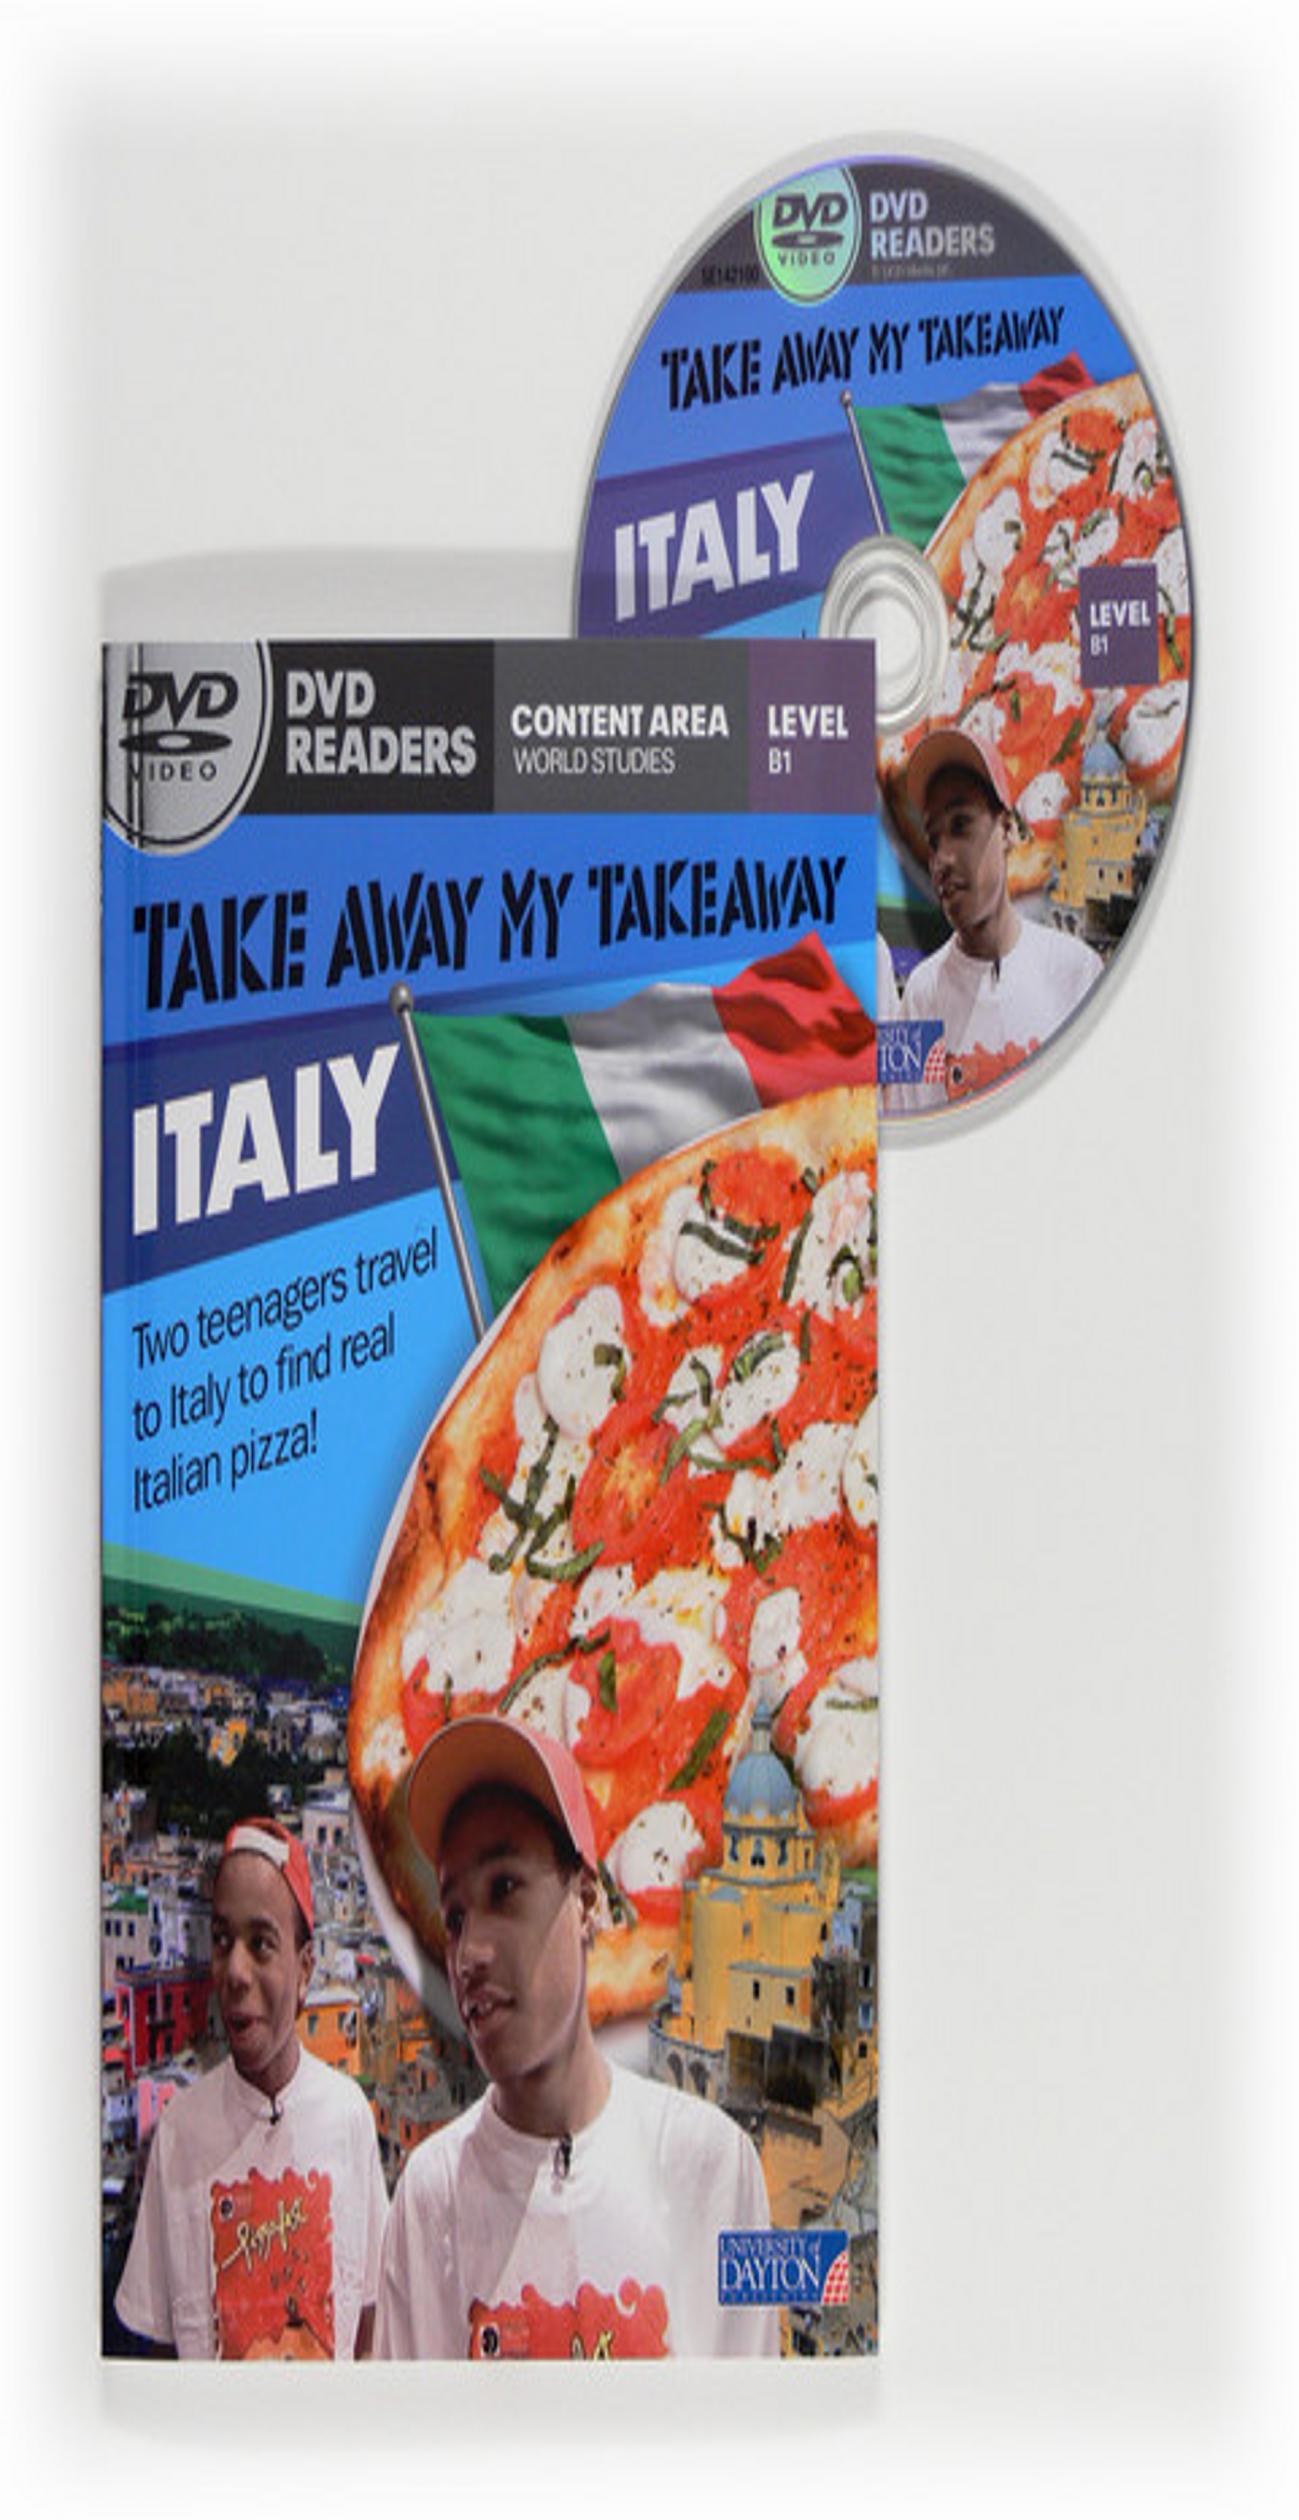 ITALY: Take Away My Takeaway - DVD READERS Level B1